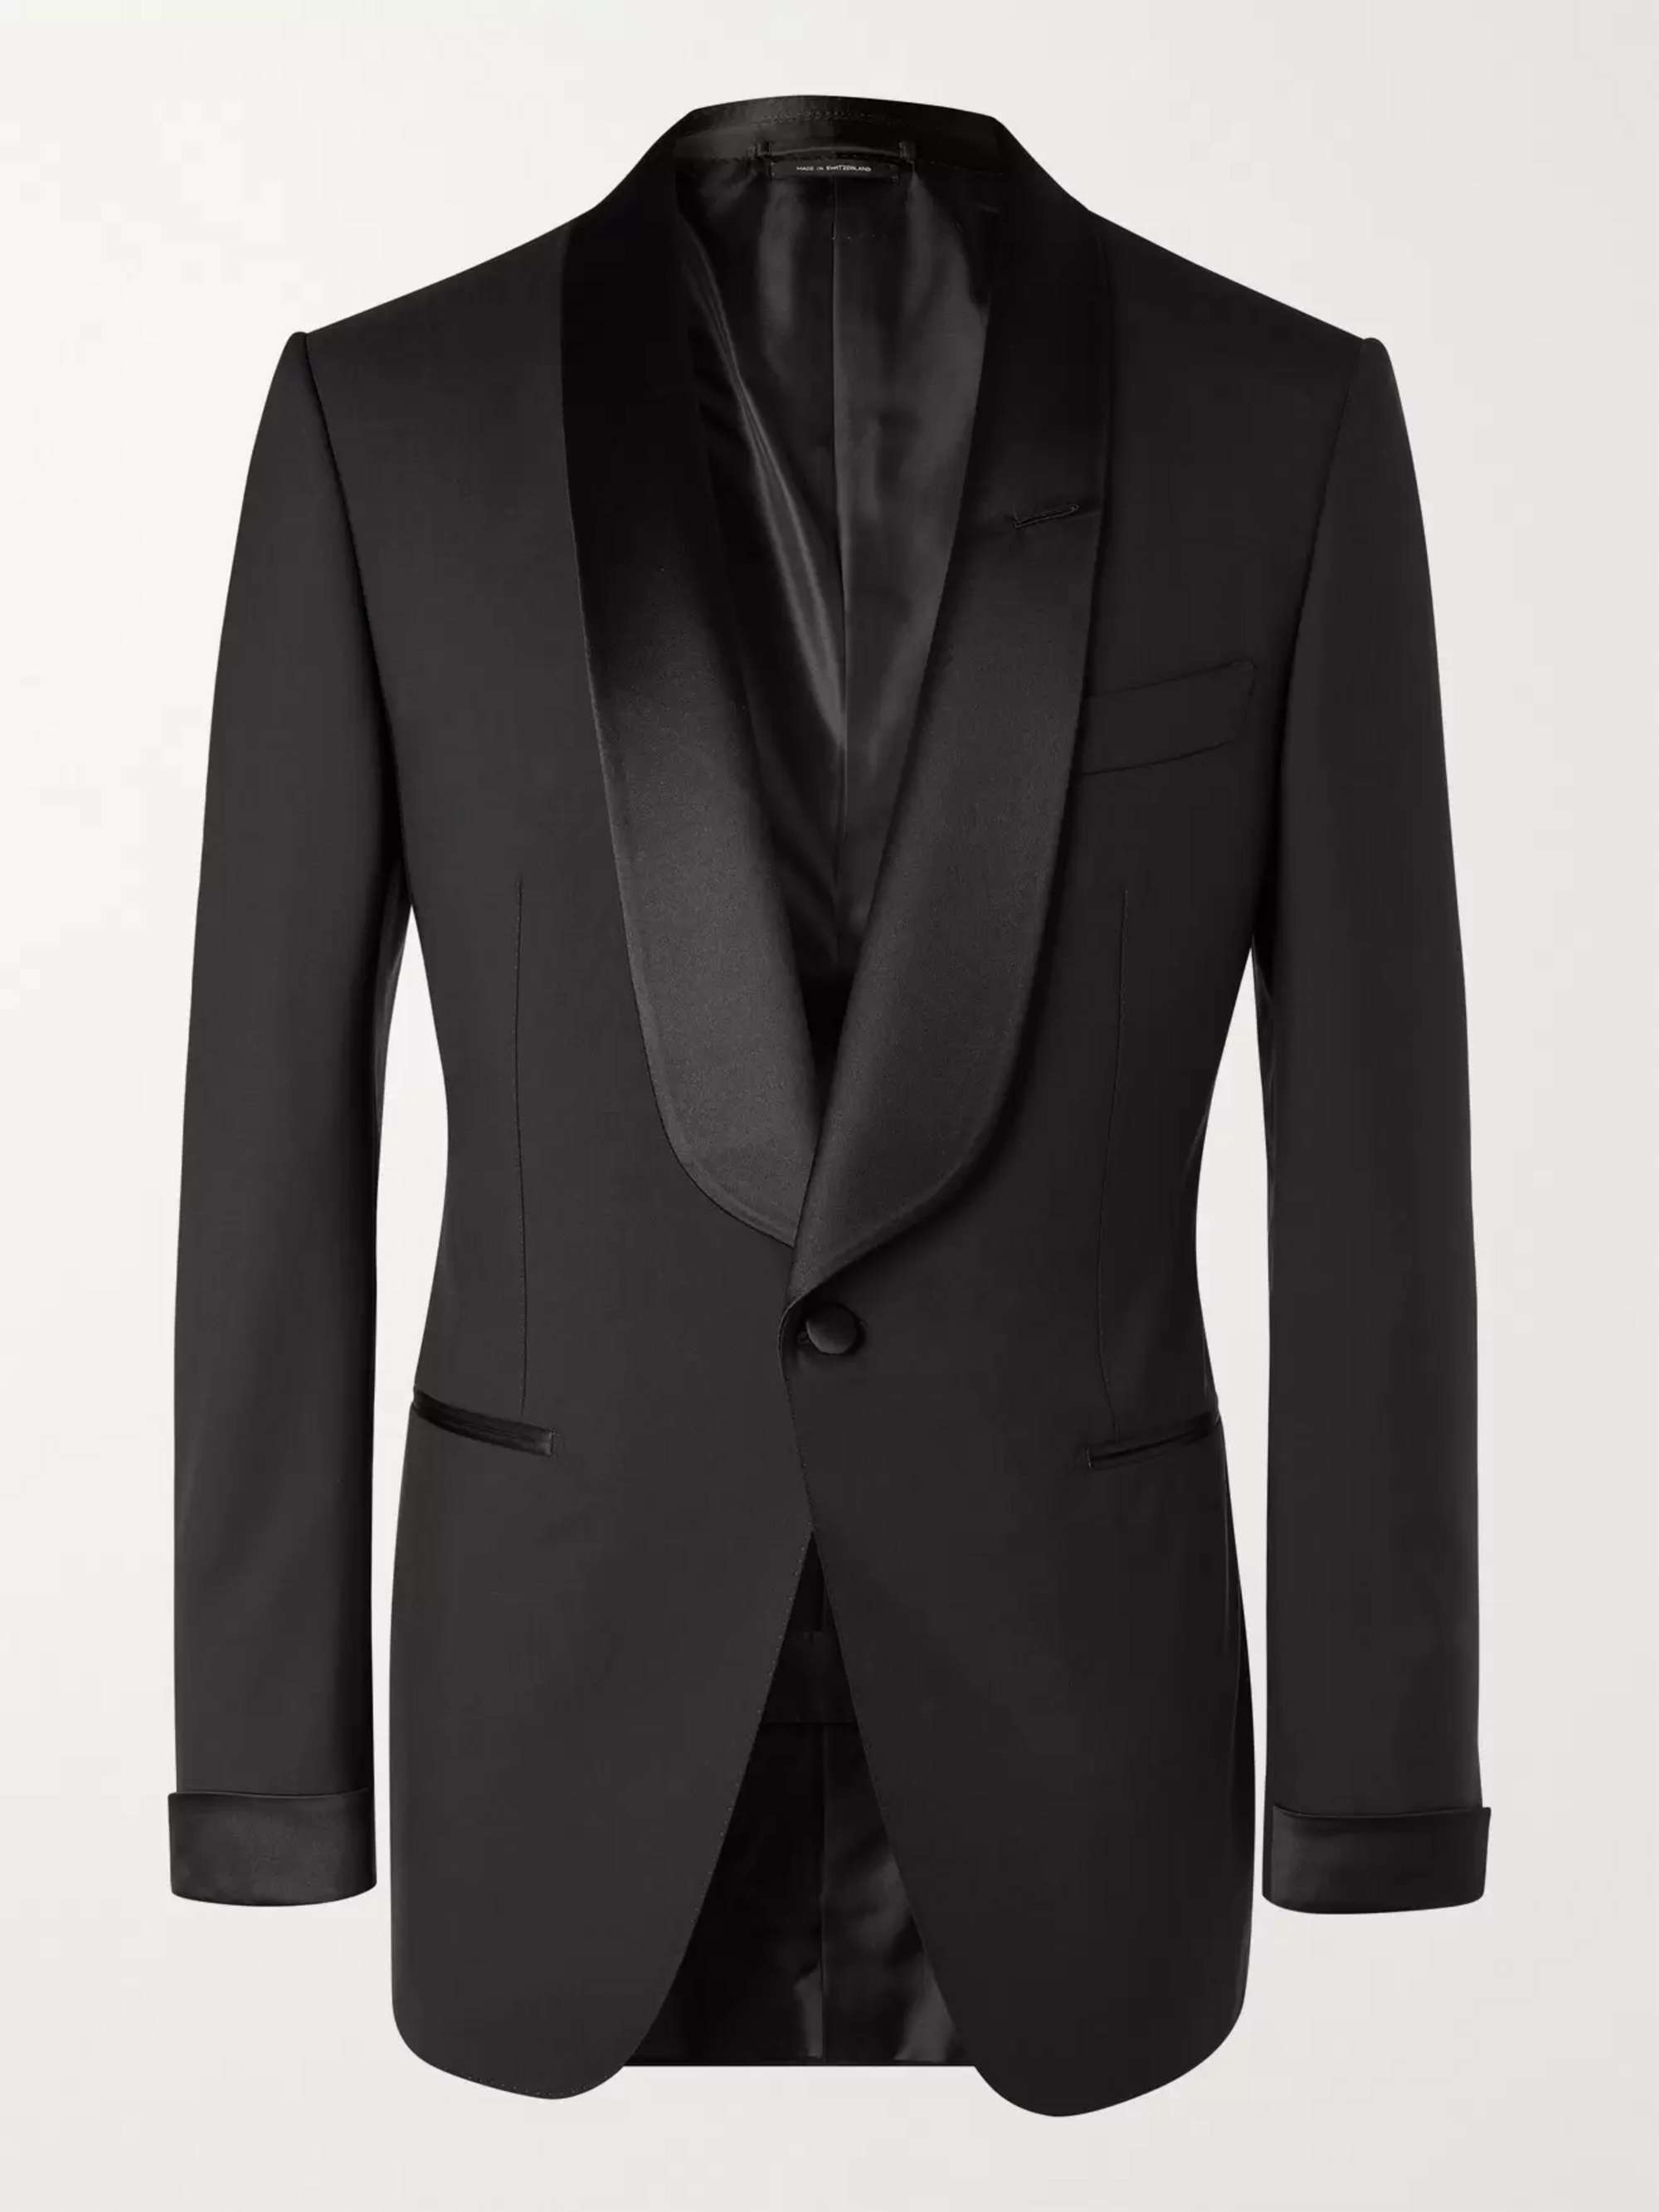 TOM FORD Slim-Fit Shawl-Collar Satin-Trimmed Wool Tuxedo Jacket